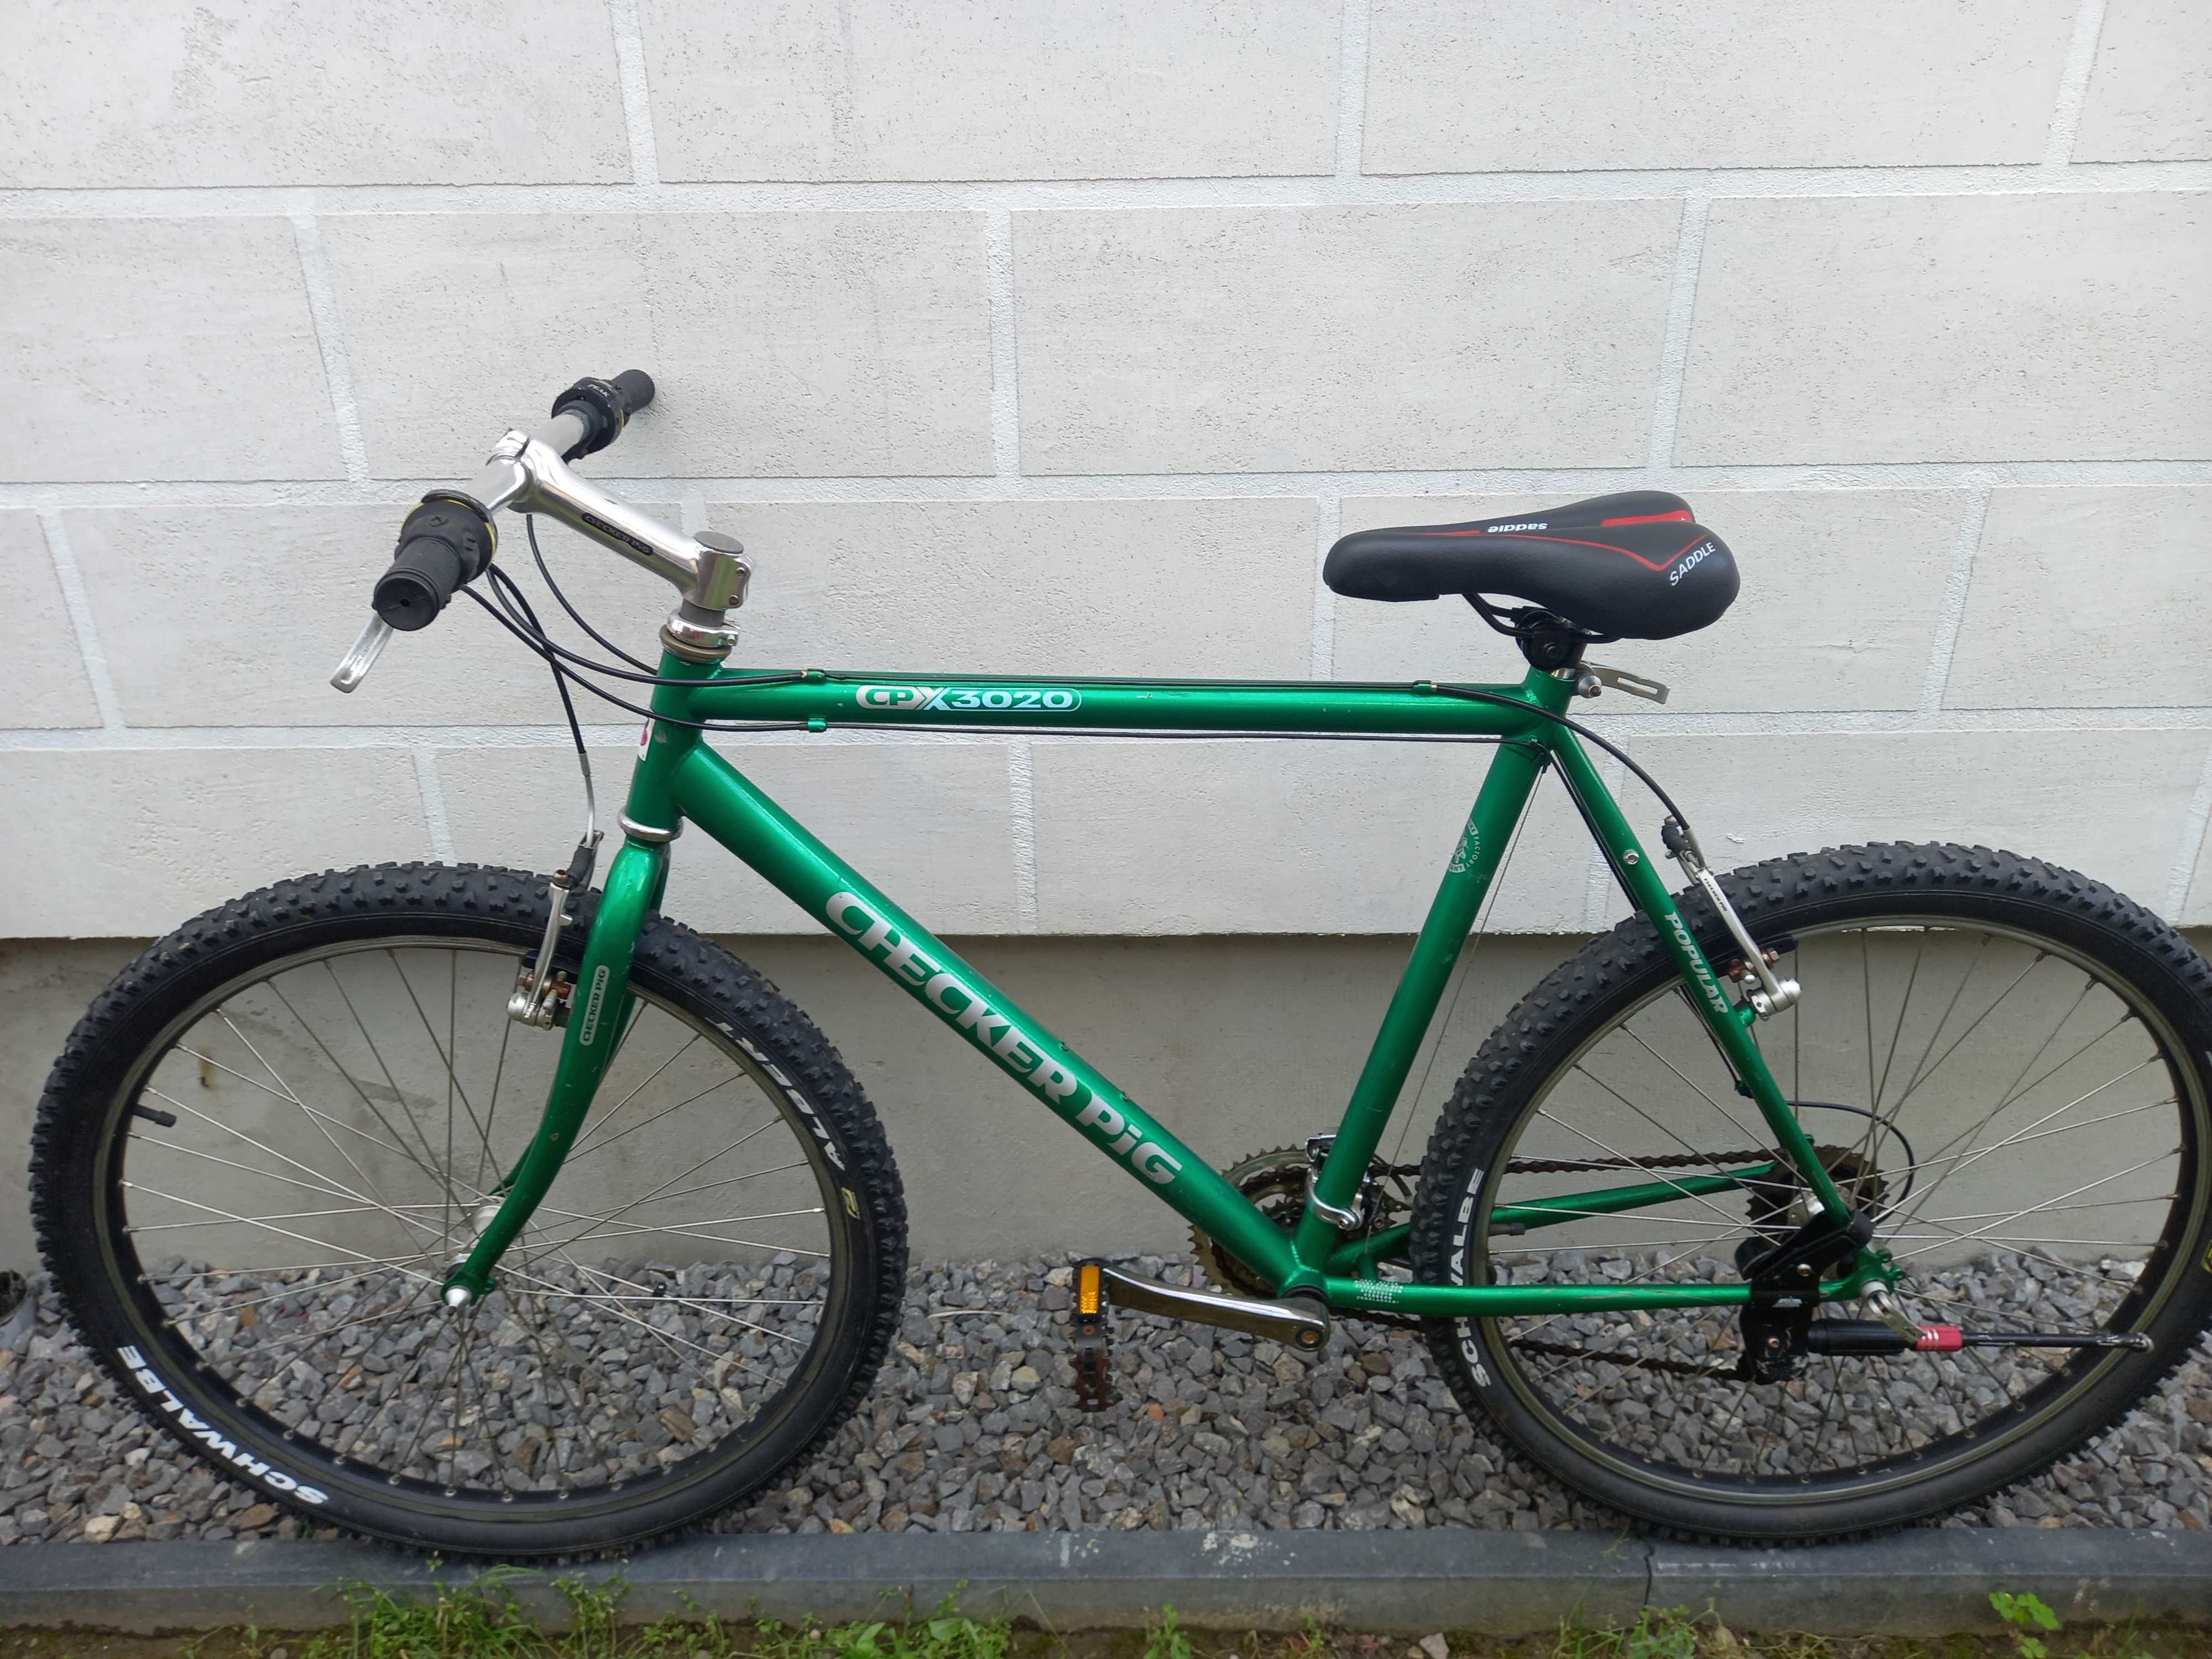 Bicicleta MTB Checker Pig CPX 3020 26"